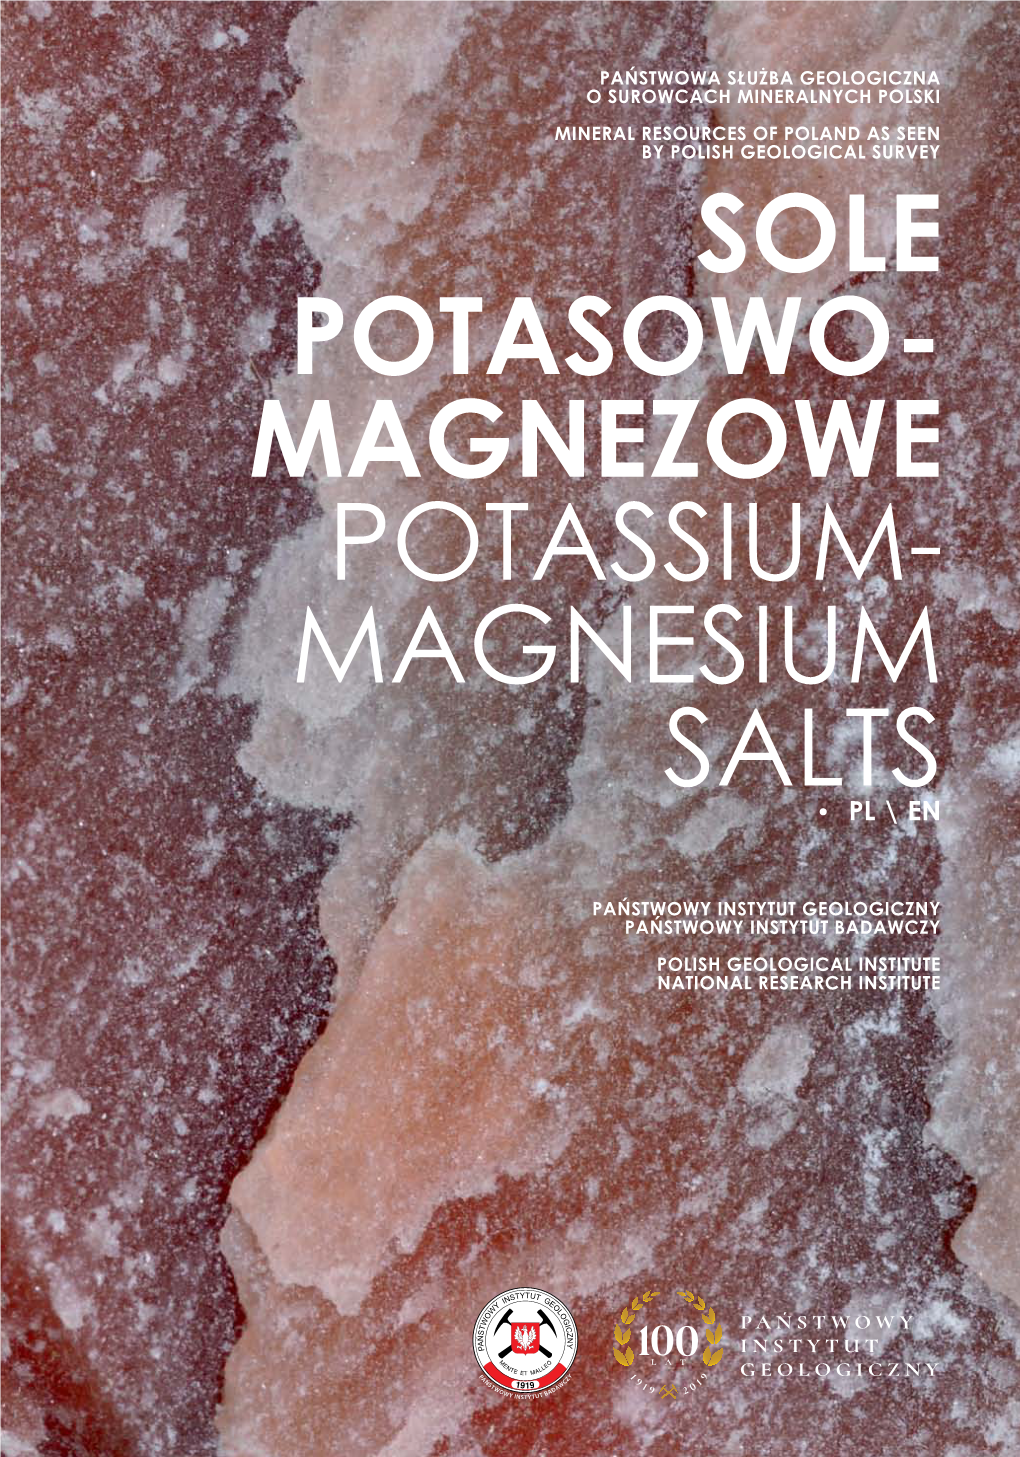 Sole Potasowo- Magnezowe Potassium- Magnesium Salts